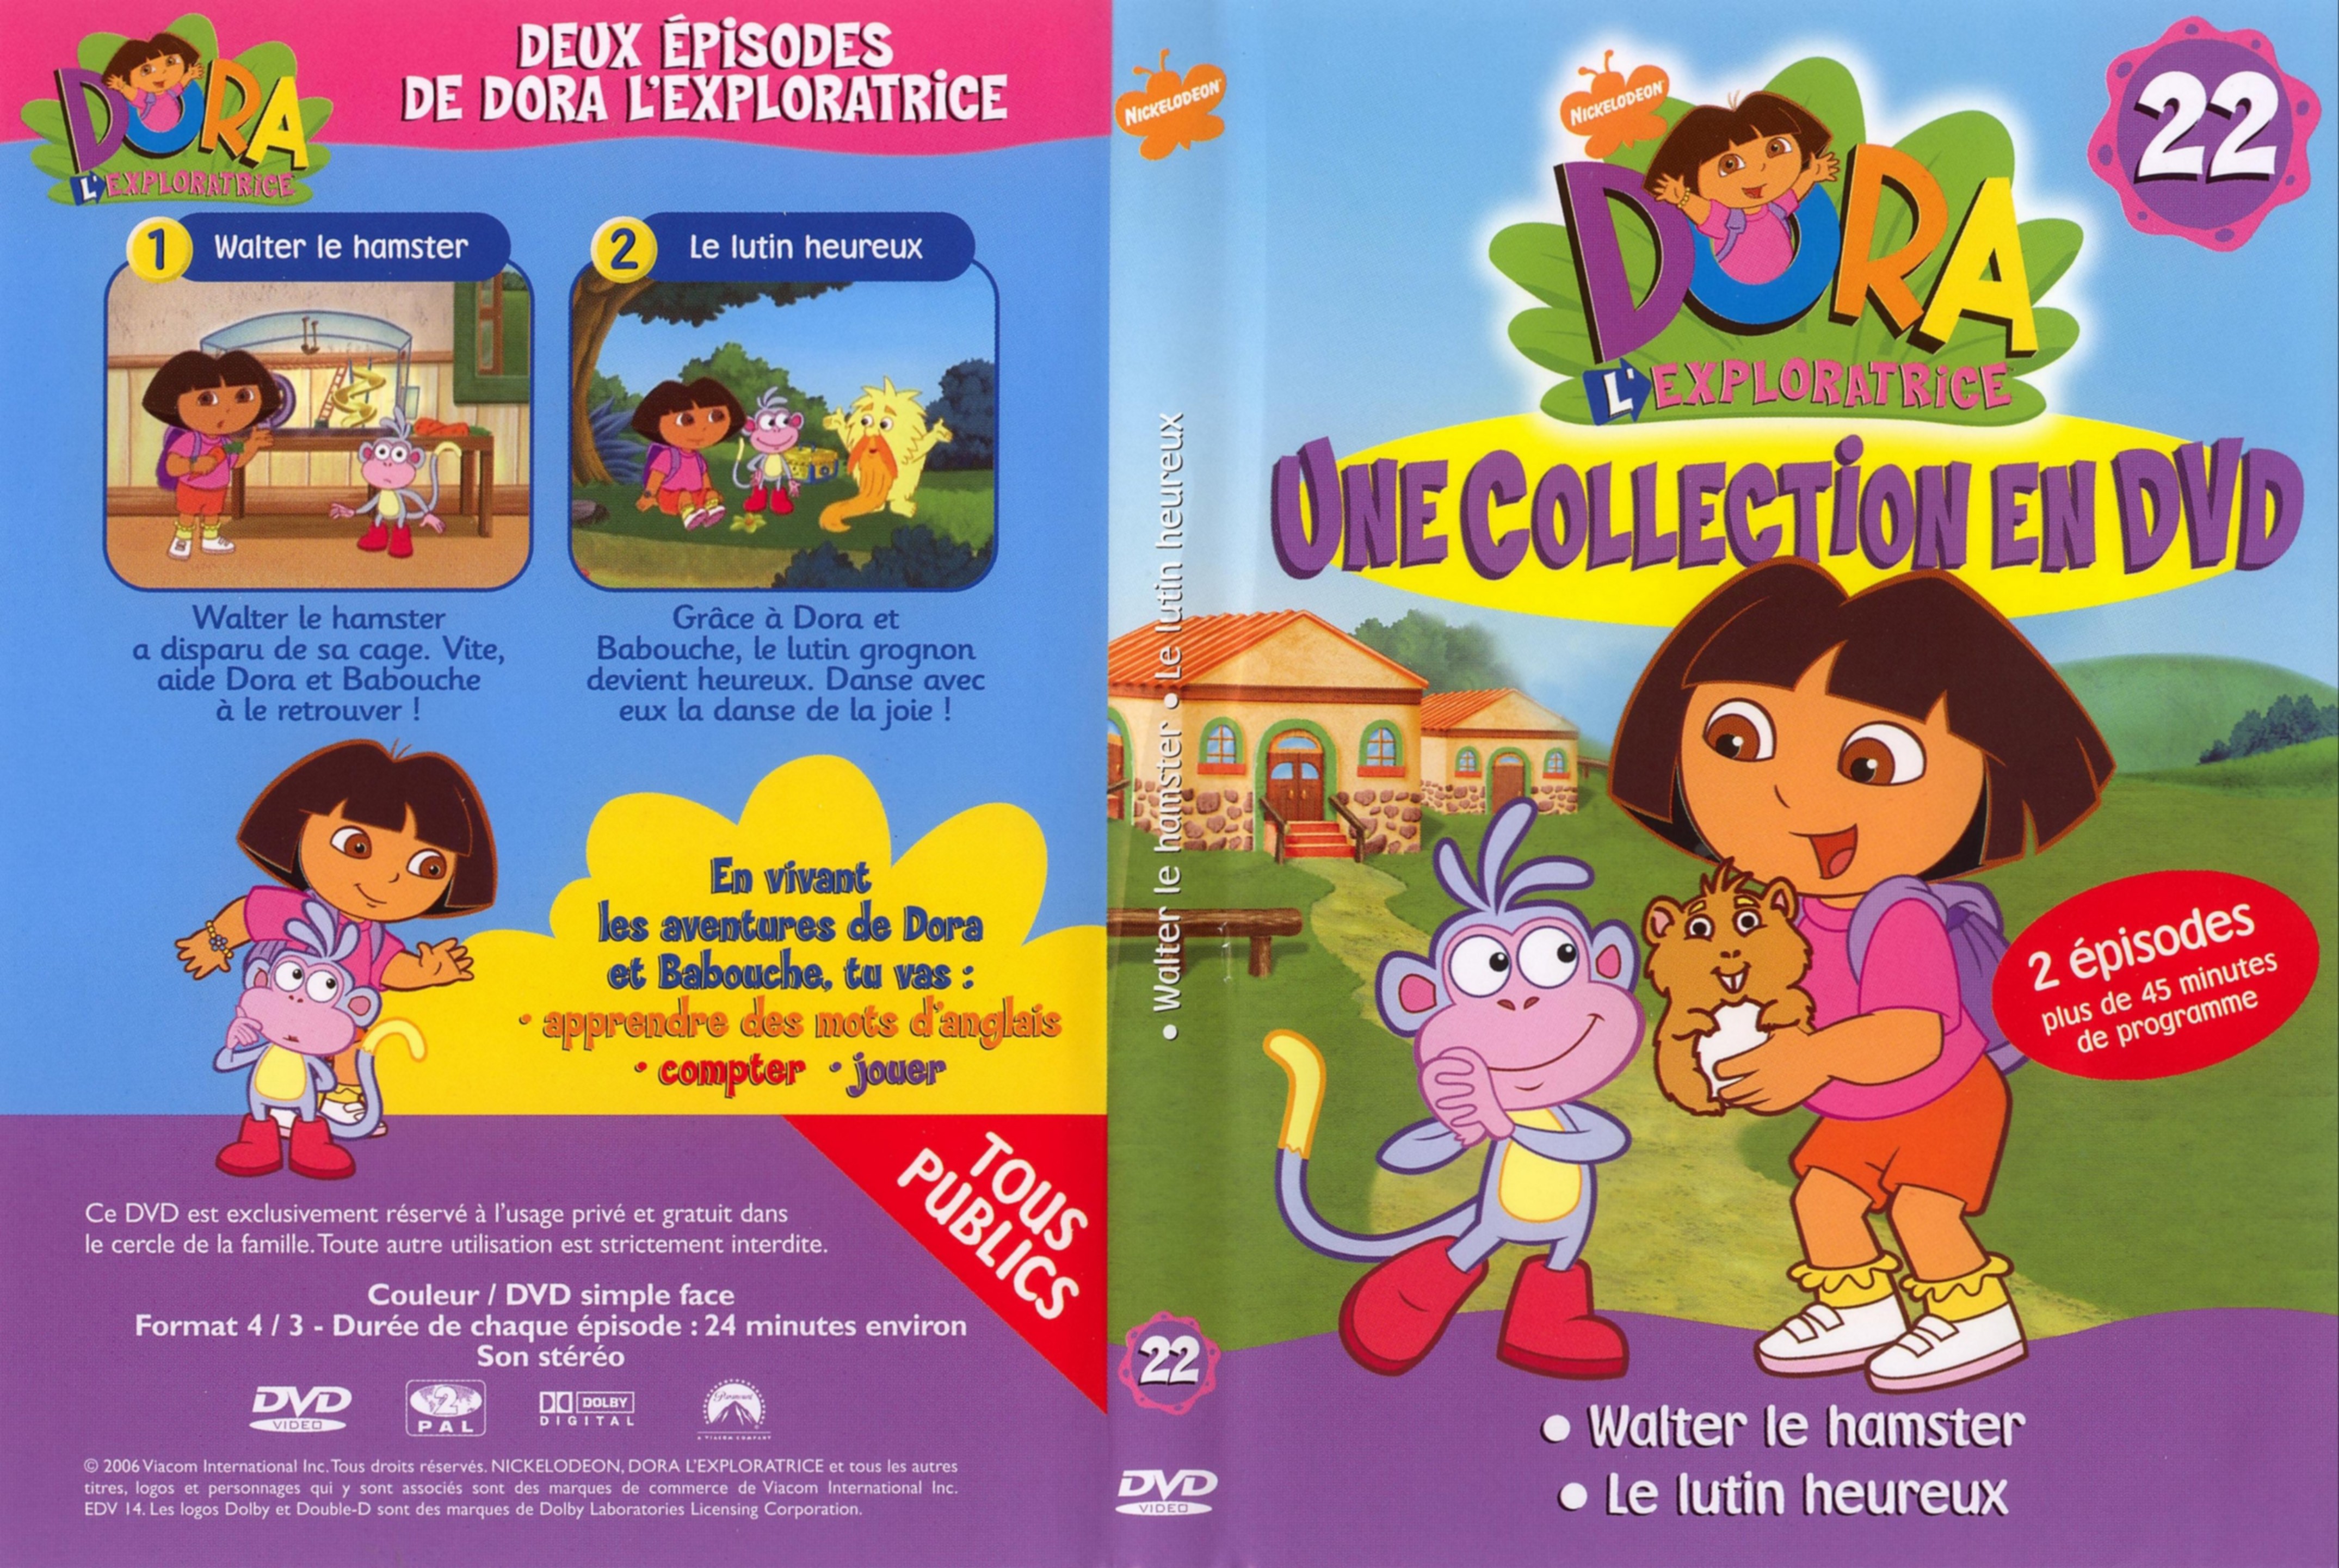 Jaquette DVD Dora l.